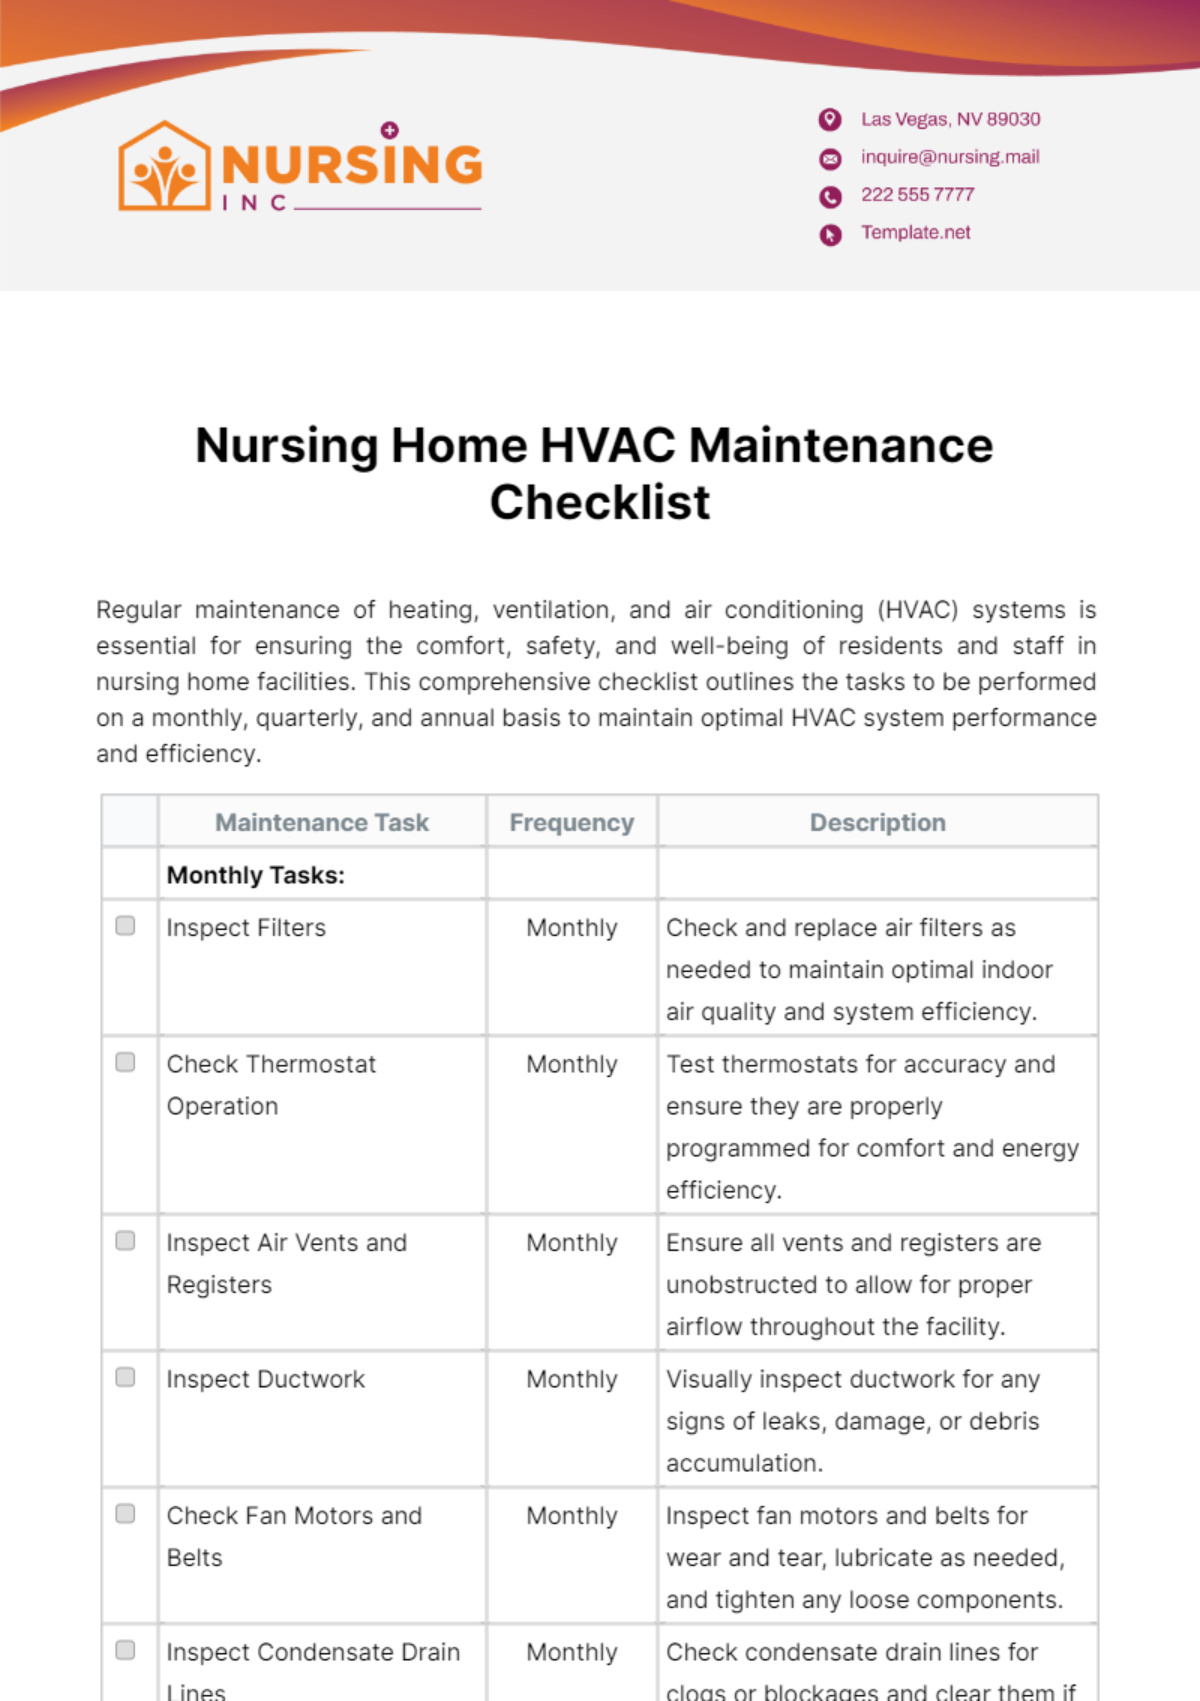 Nursing Home HVAC Maintenance Checklist Template